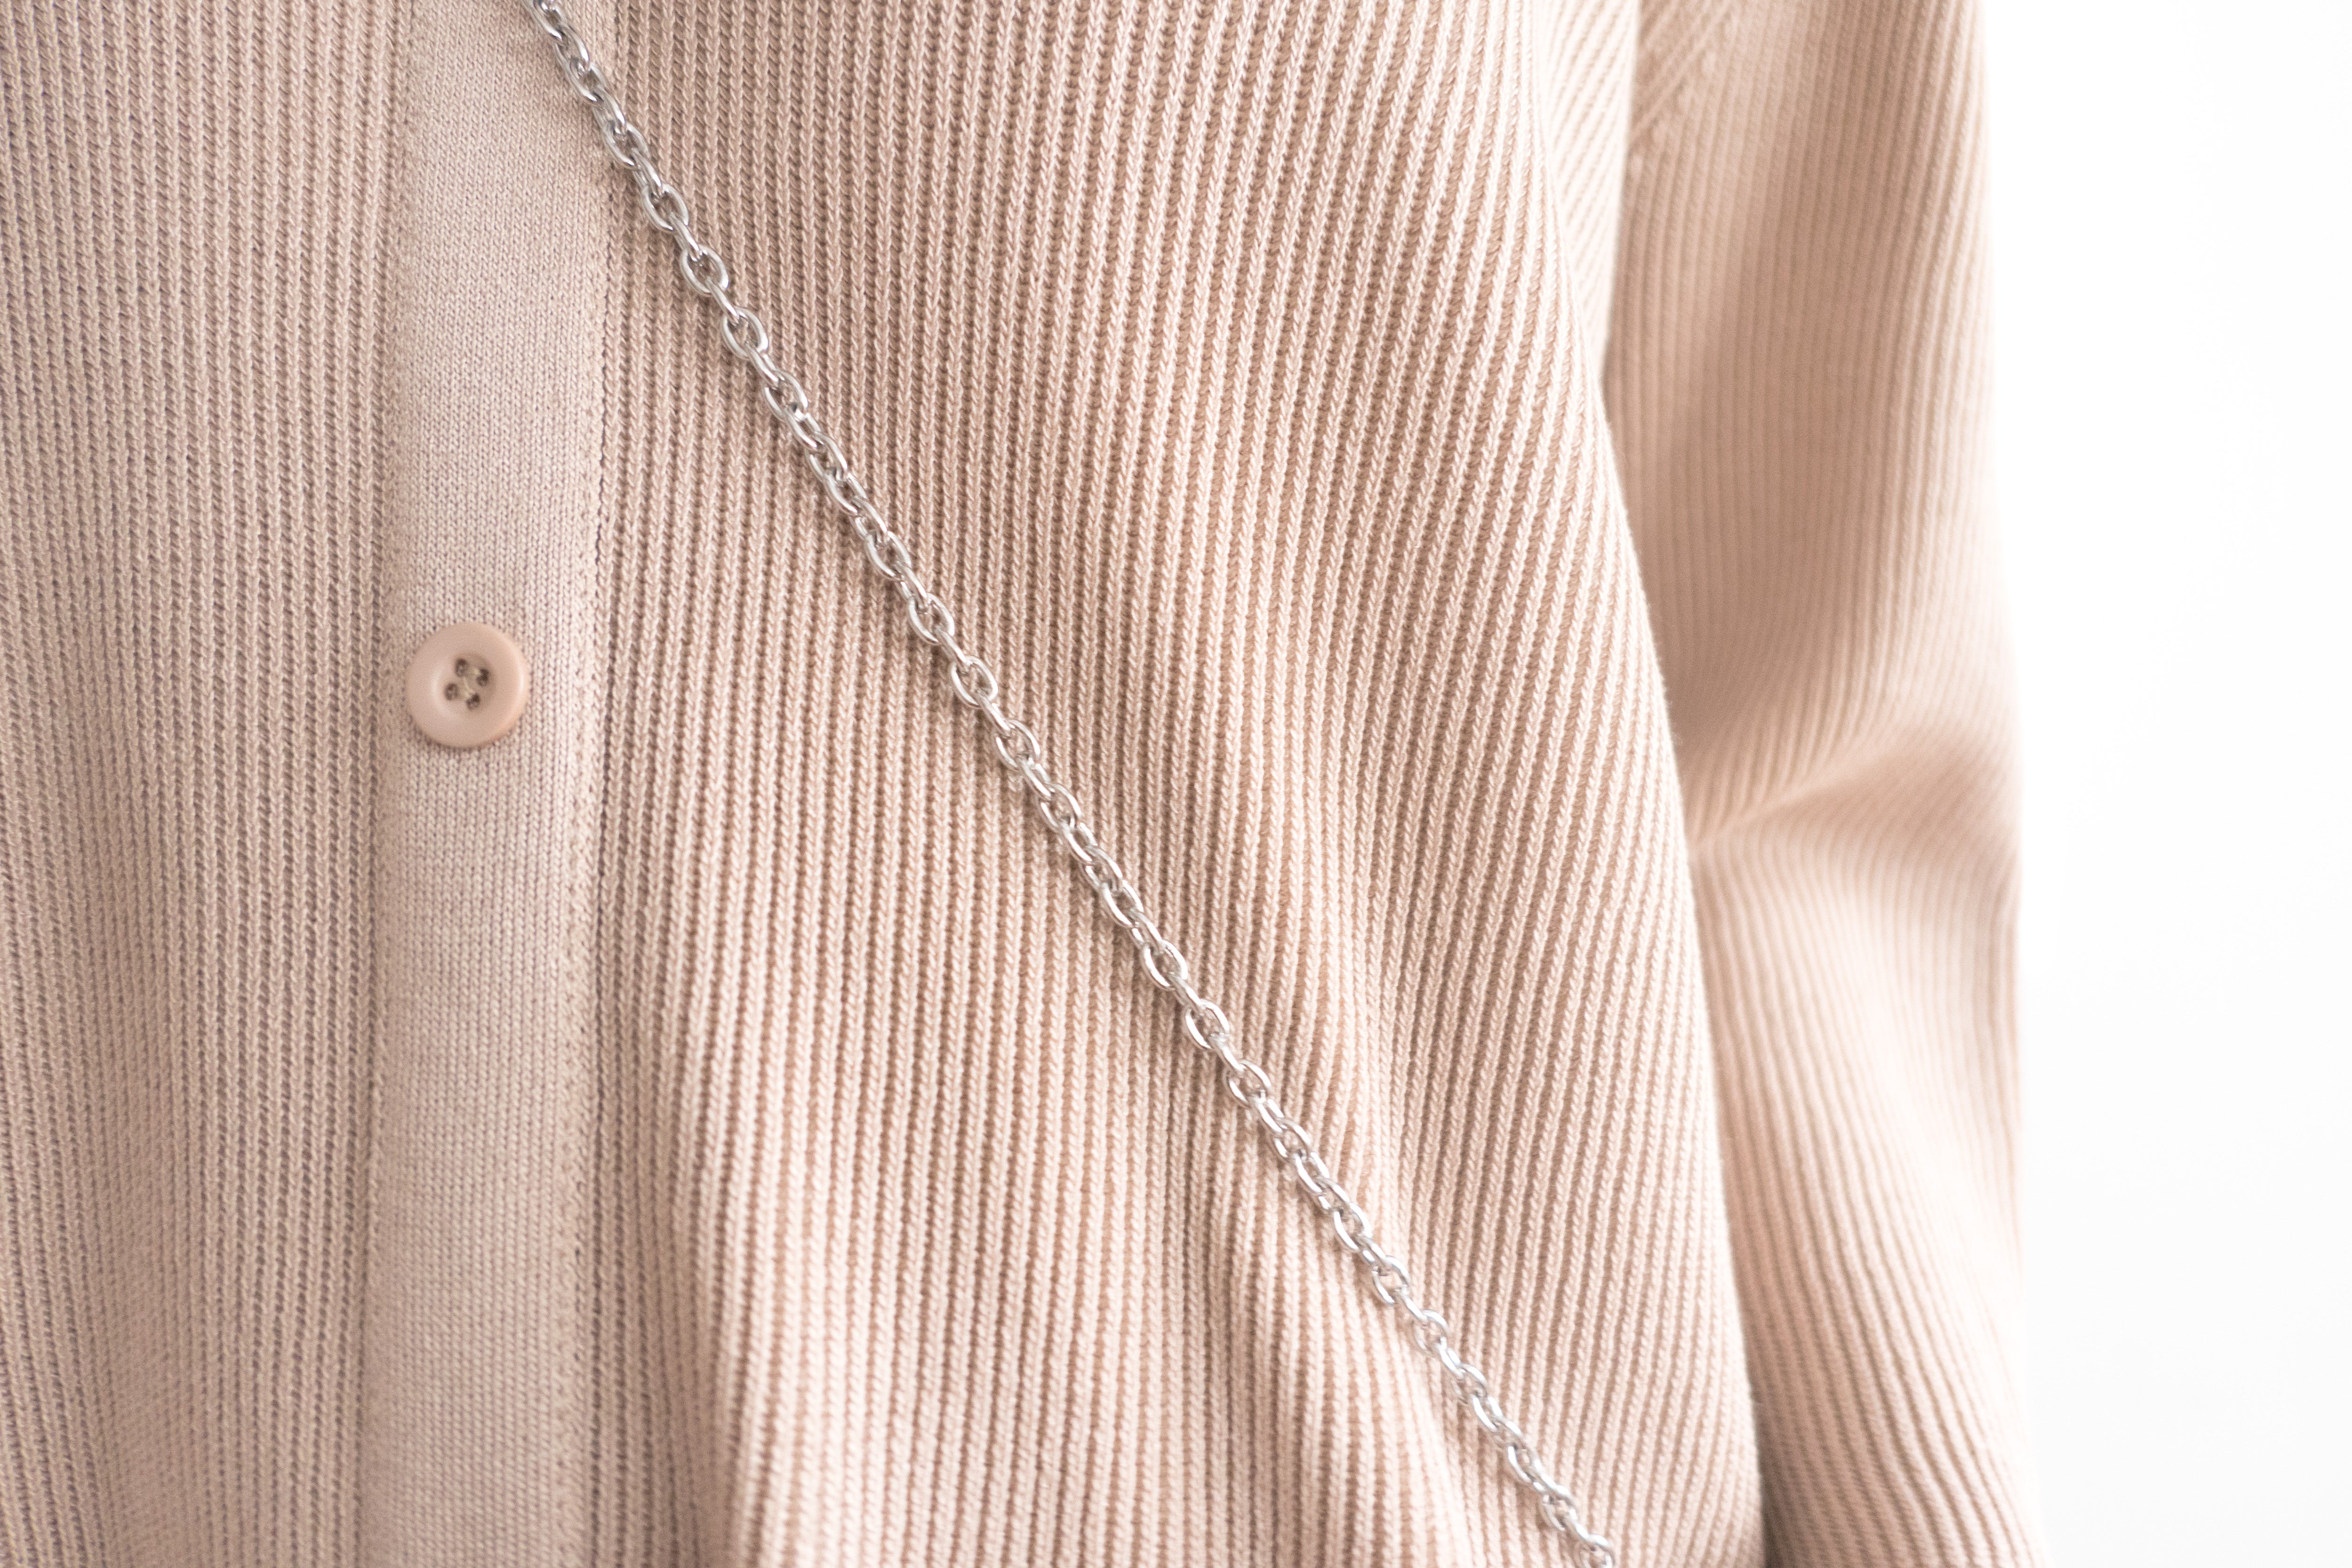 Collar 防毛線料開領假鈕後開叉針織, Knit Dress/ DS9425